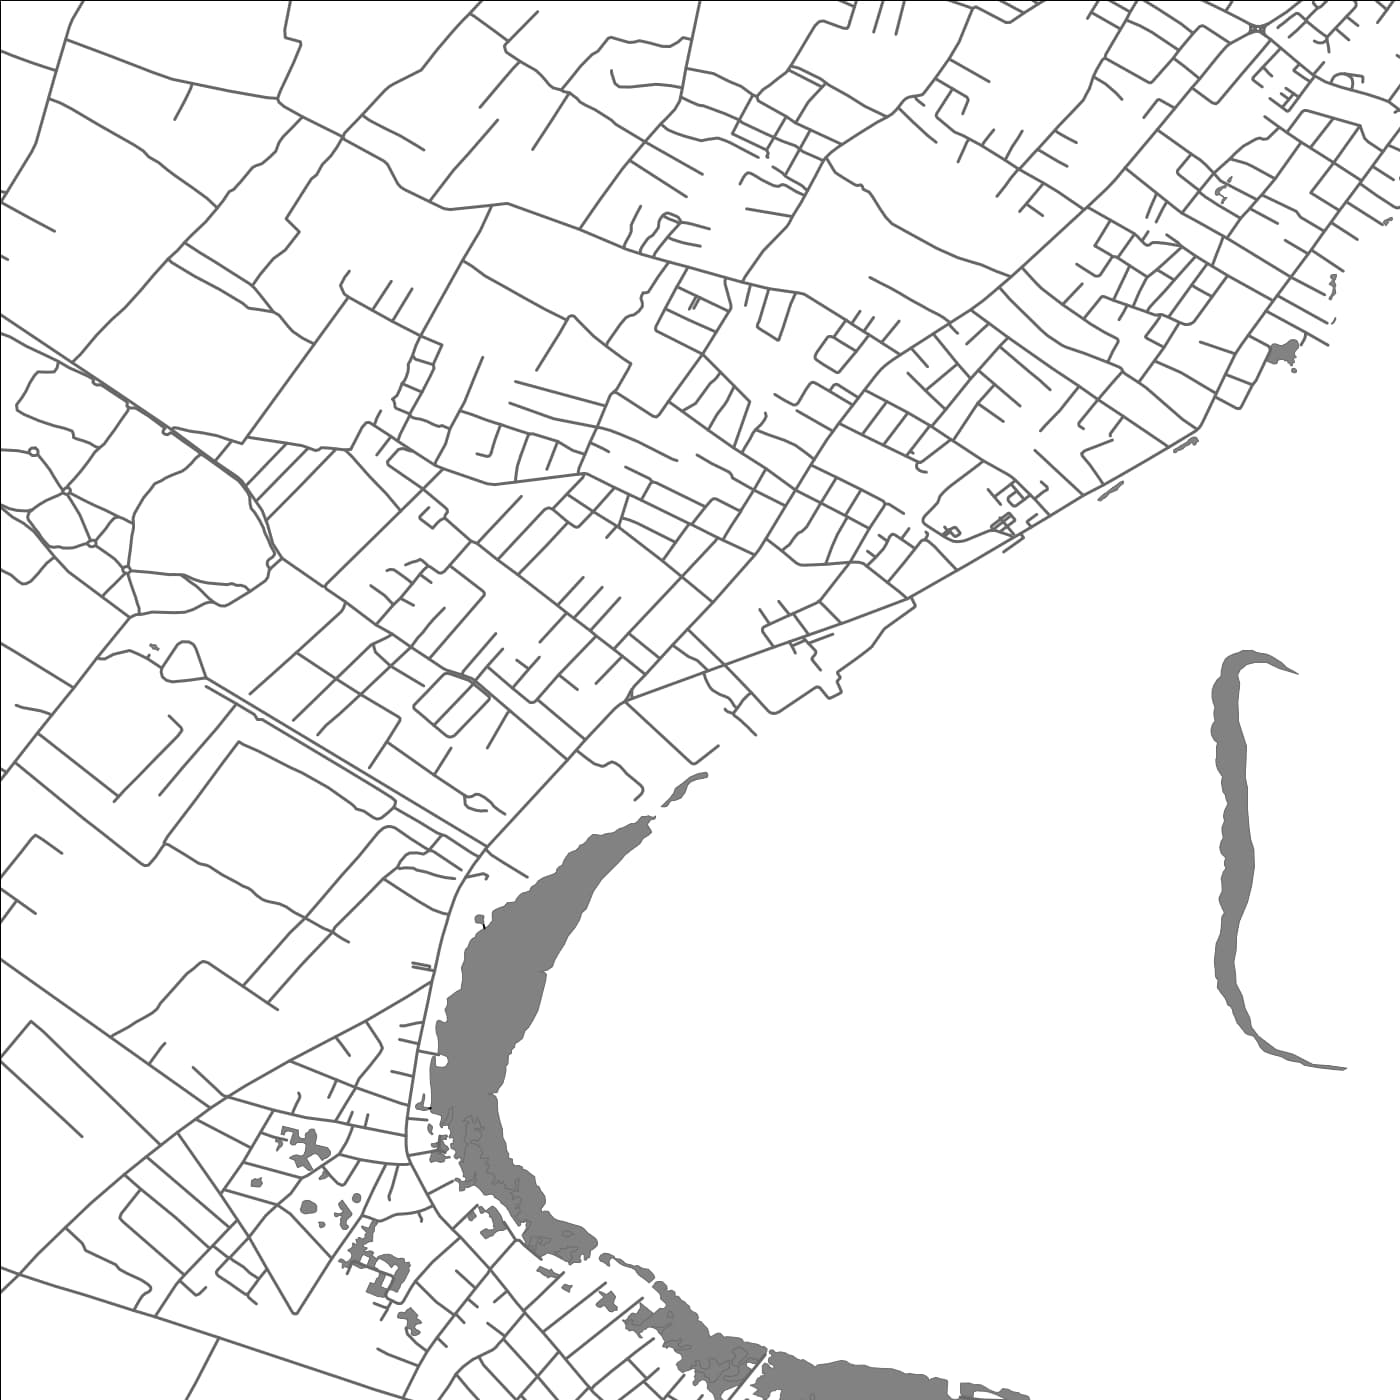 ROAD MAP OF KOLOUA, TONGA BY MAPBAKES